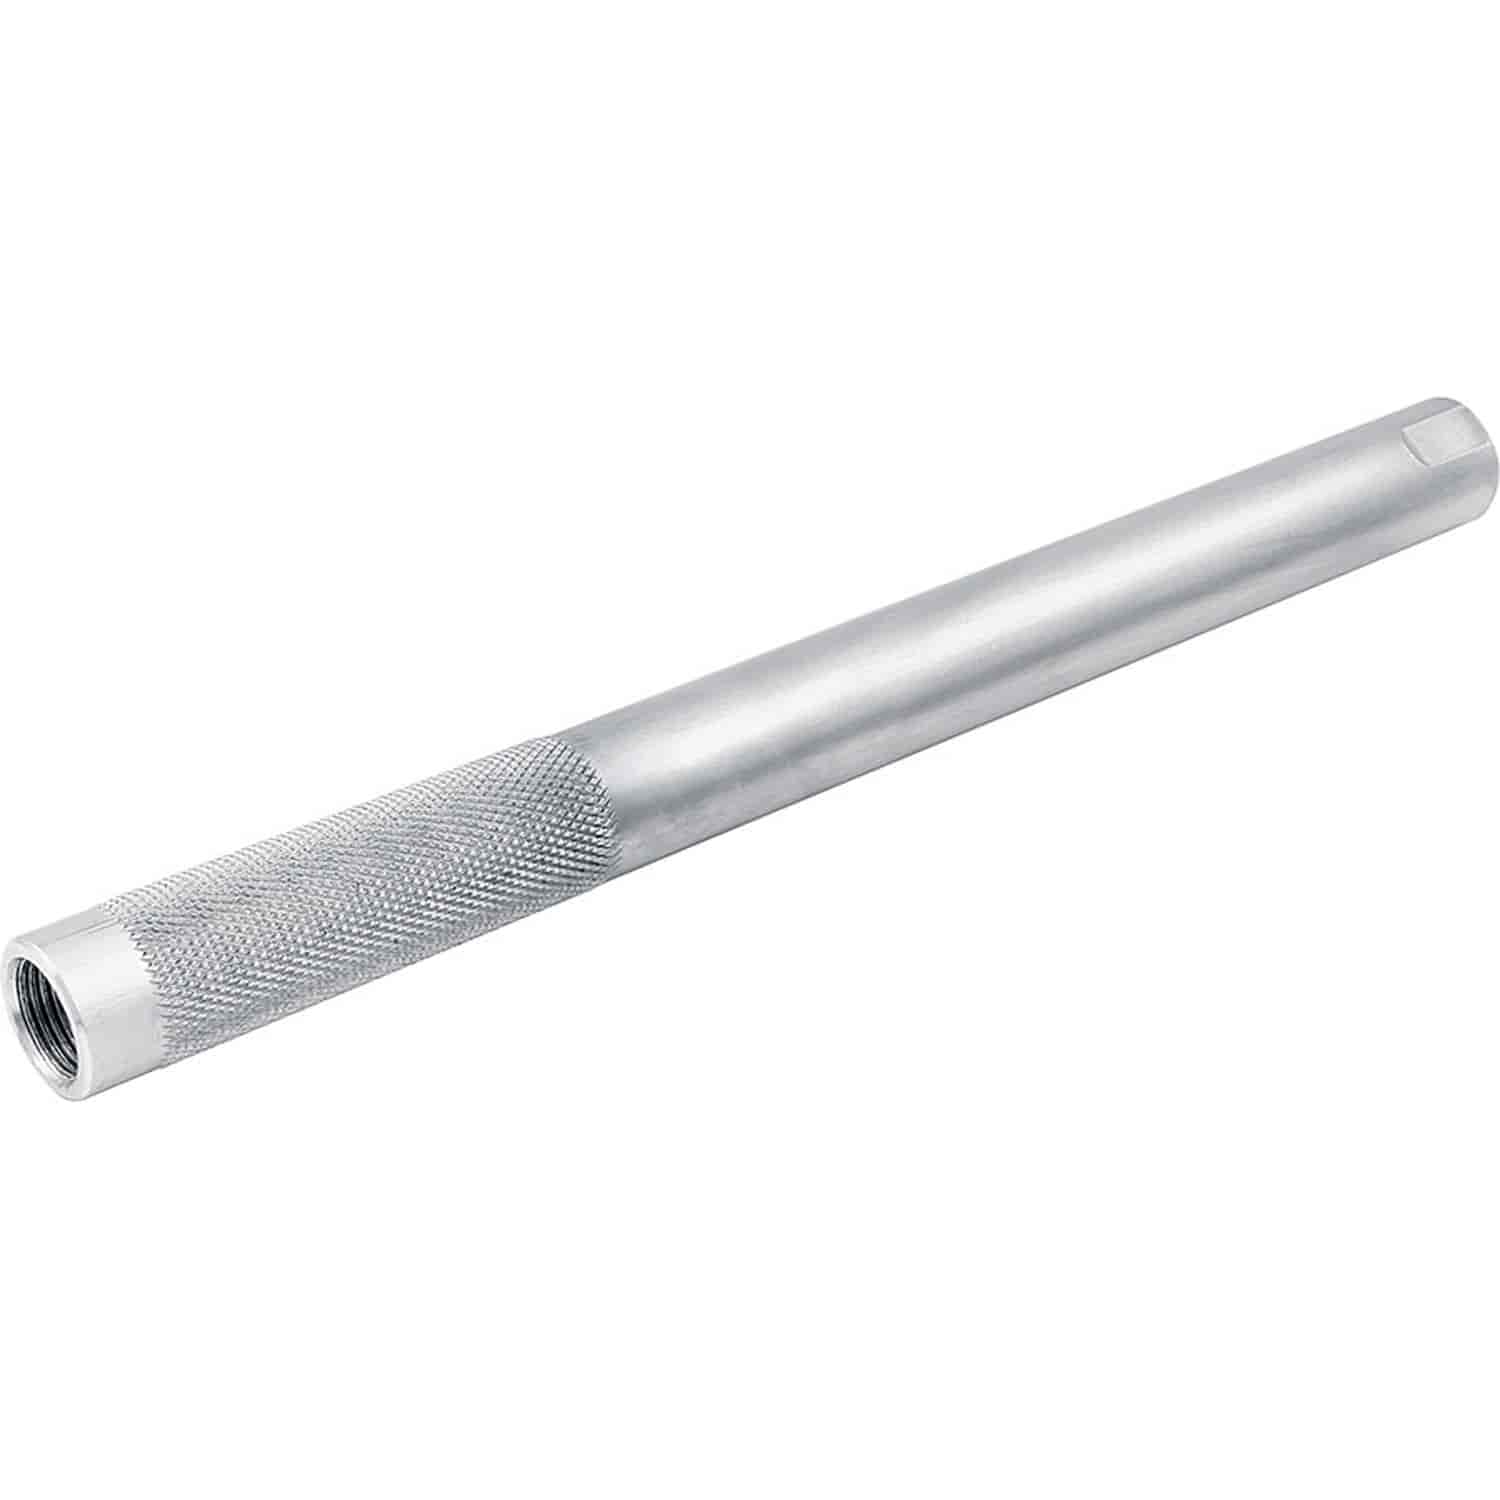 Swedged Aluminum Tie Rod Tube Length: 14